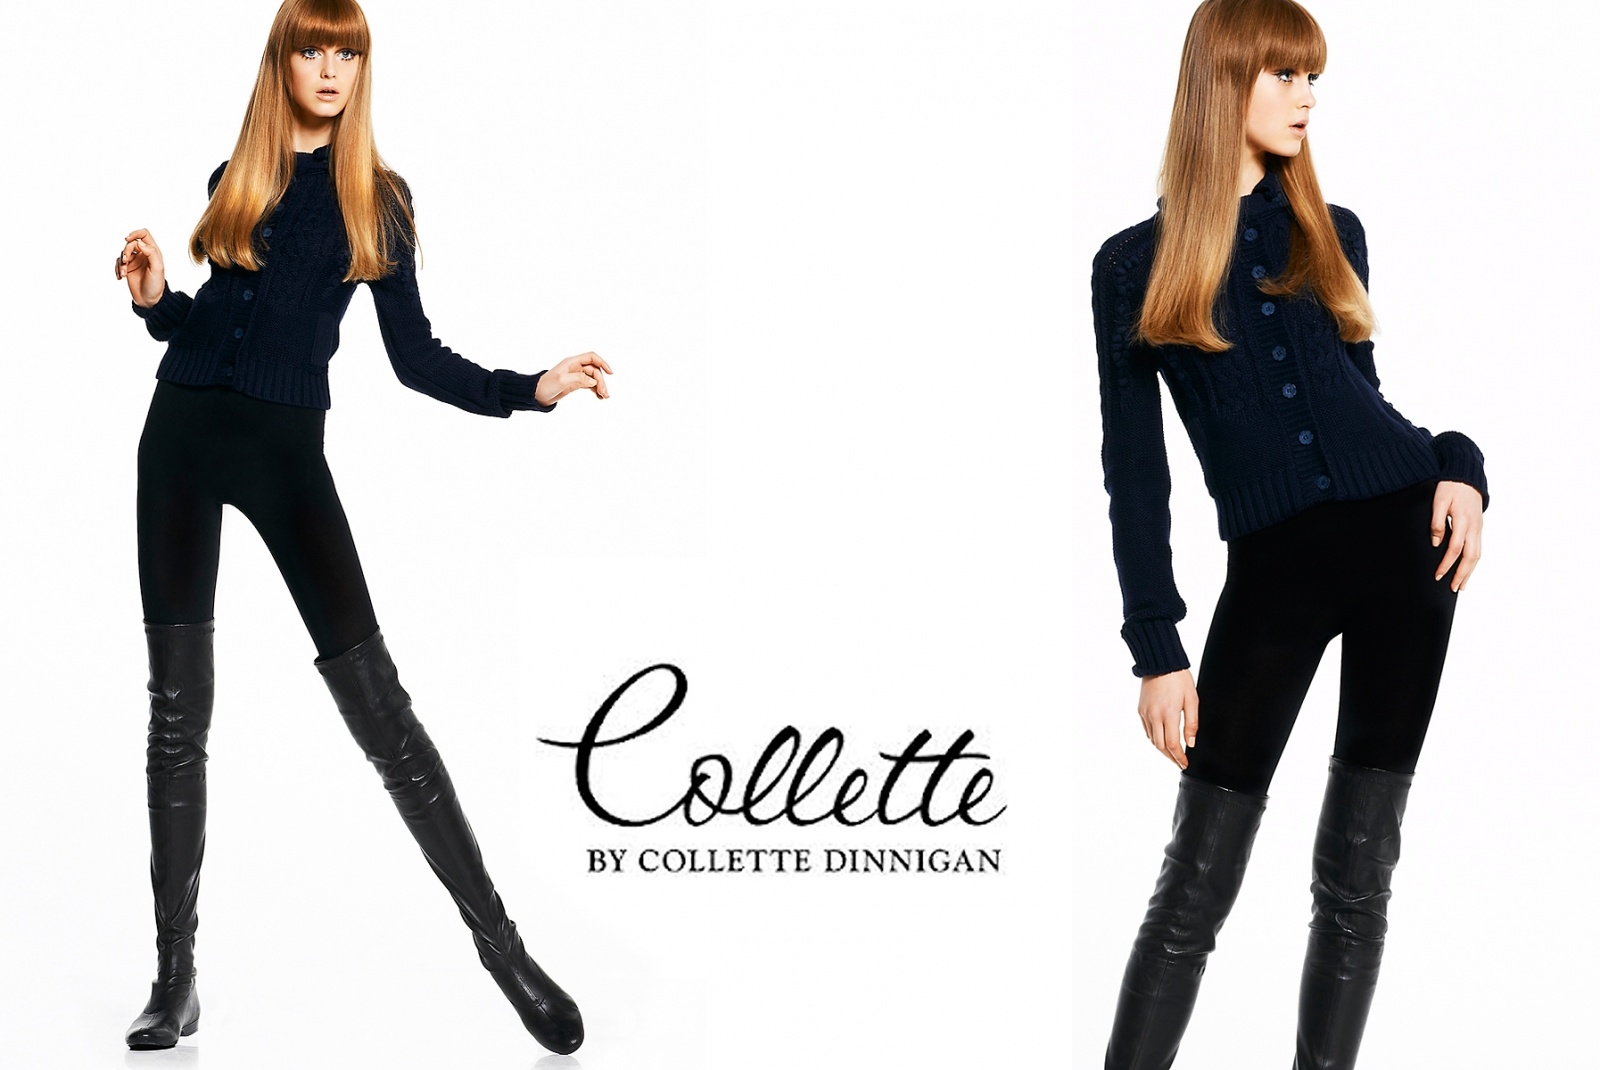 Collette by Collette Dinnigan